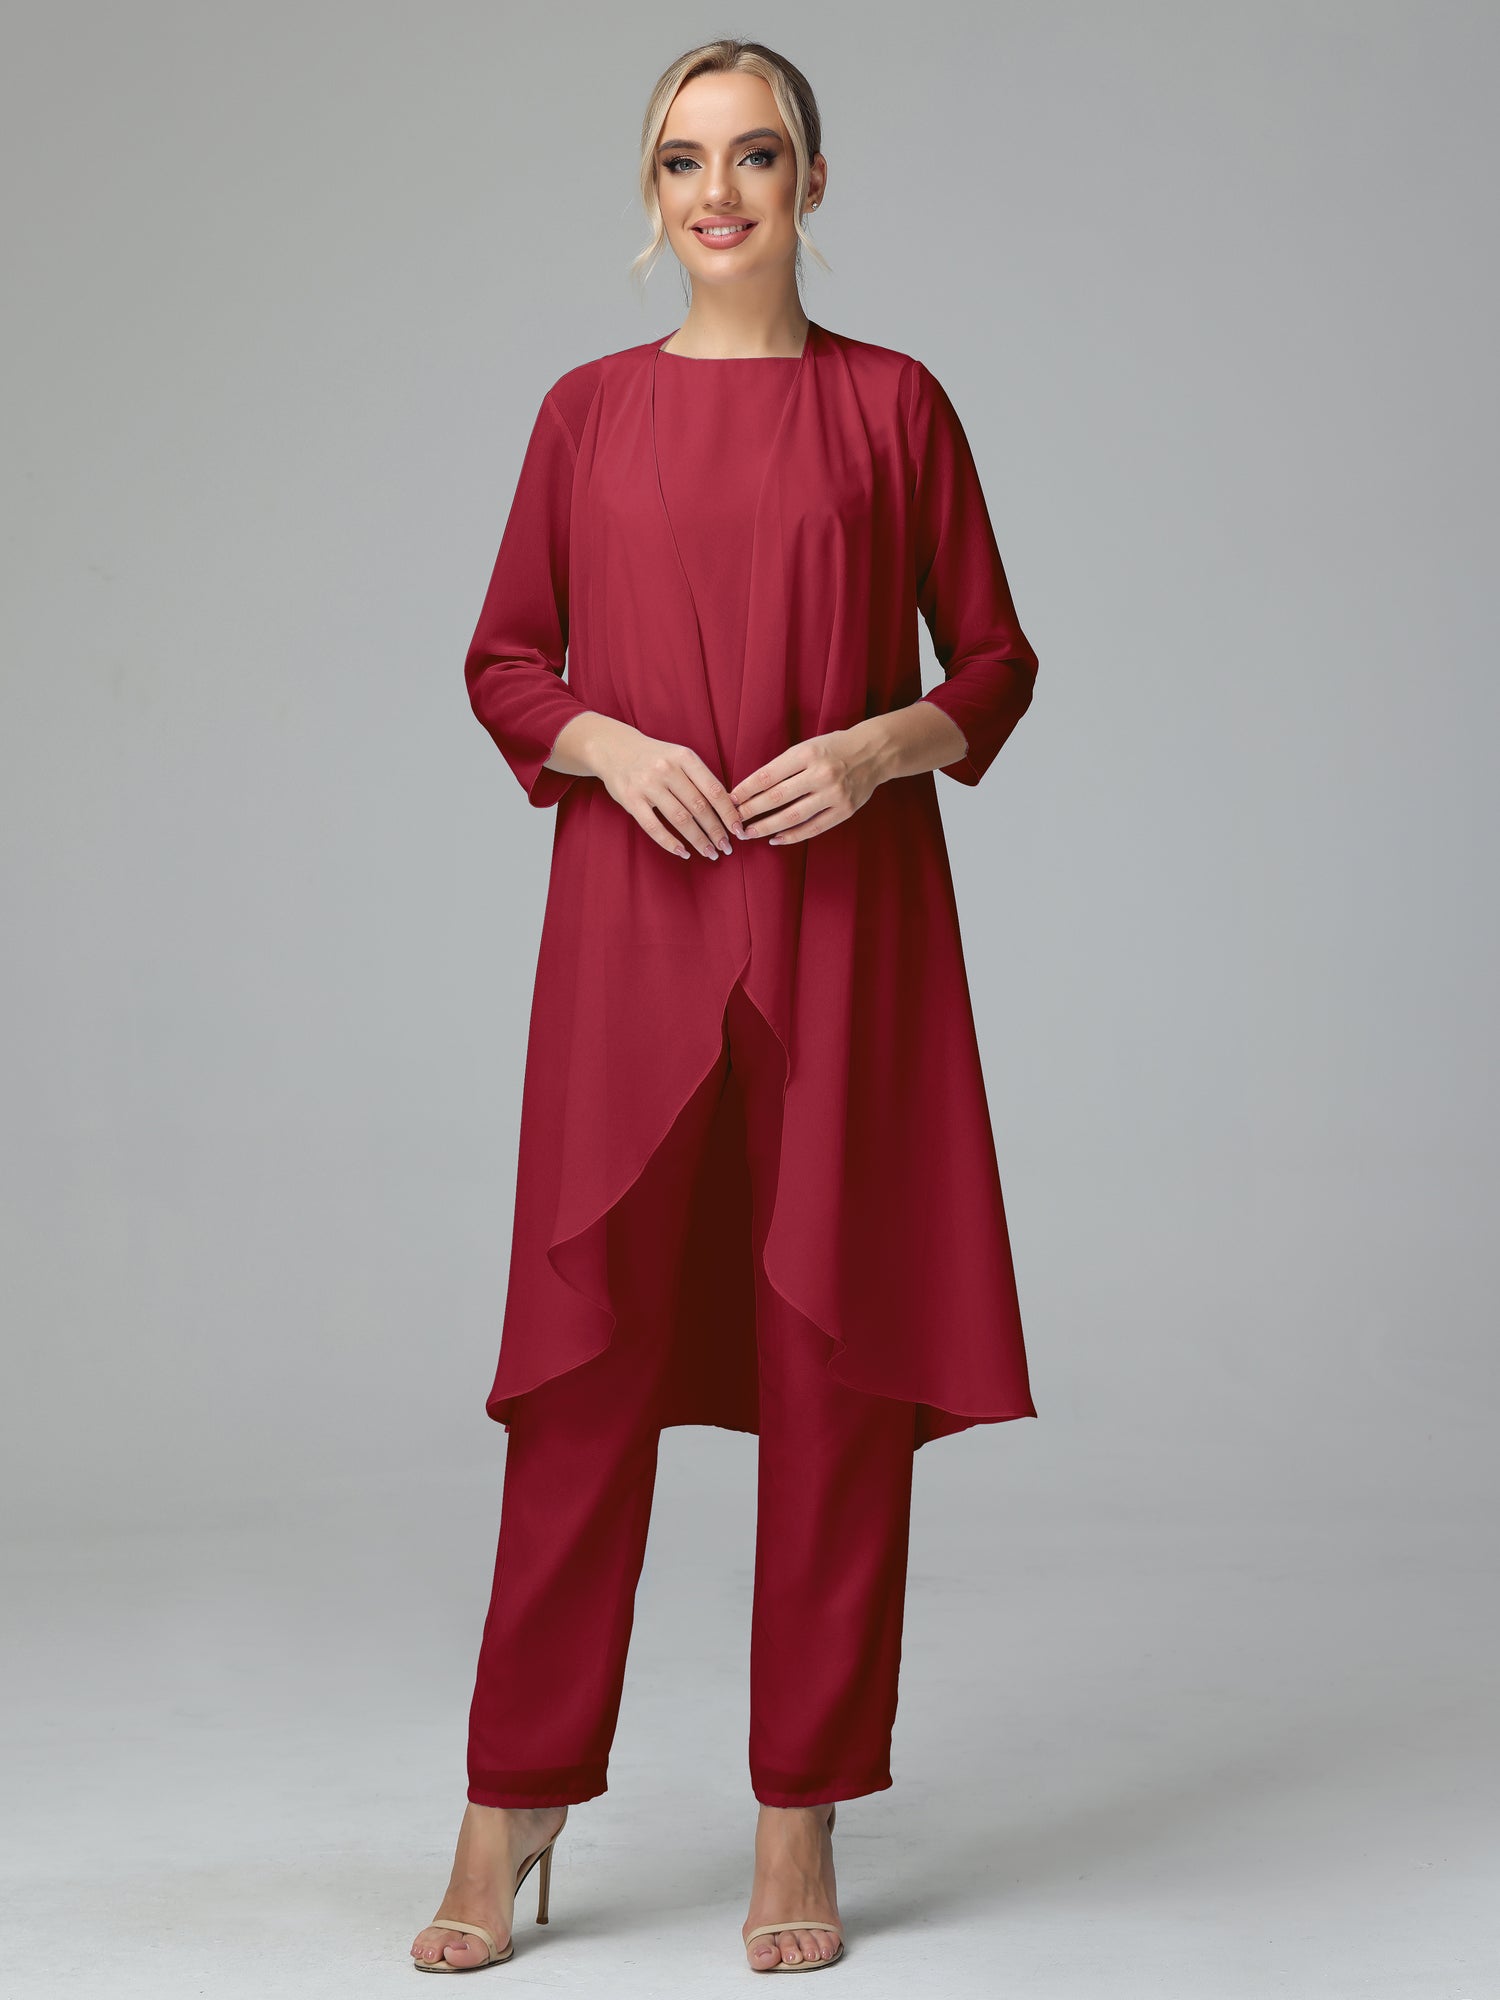 African Print patchwork Office pants-suit set for women X10710 | eBay